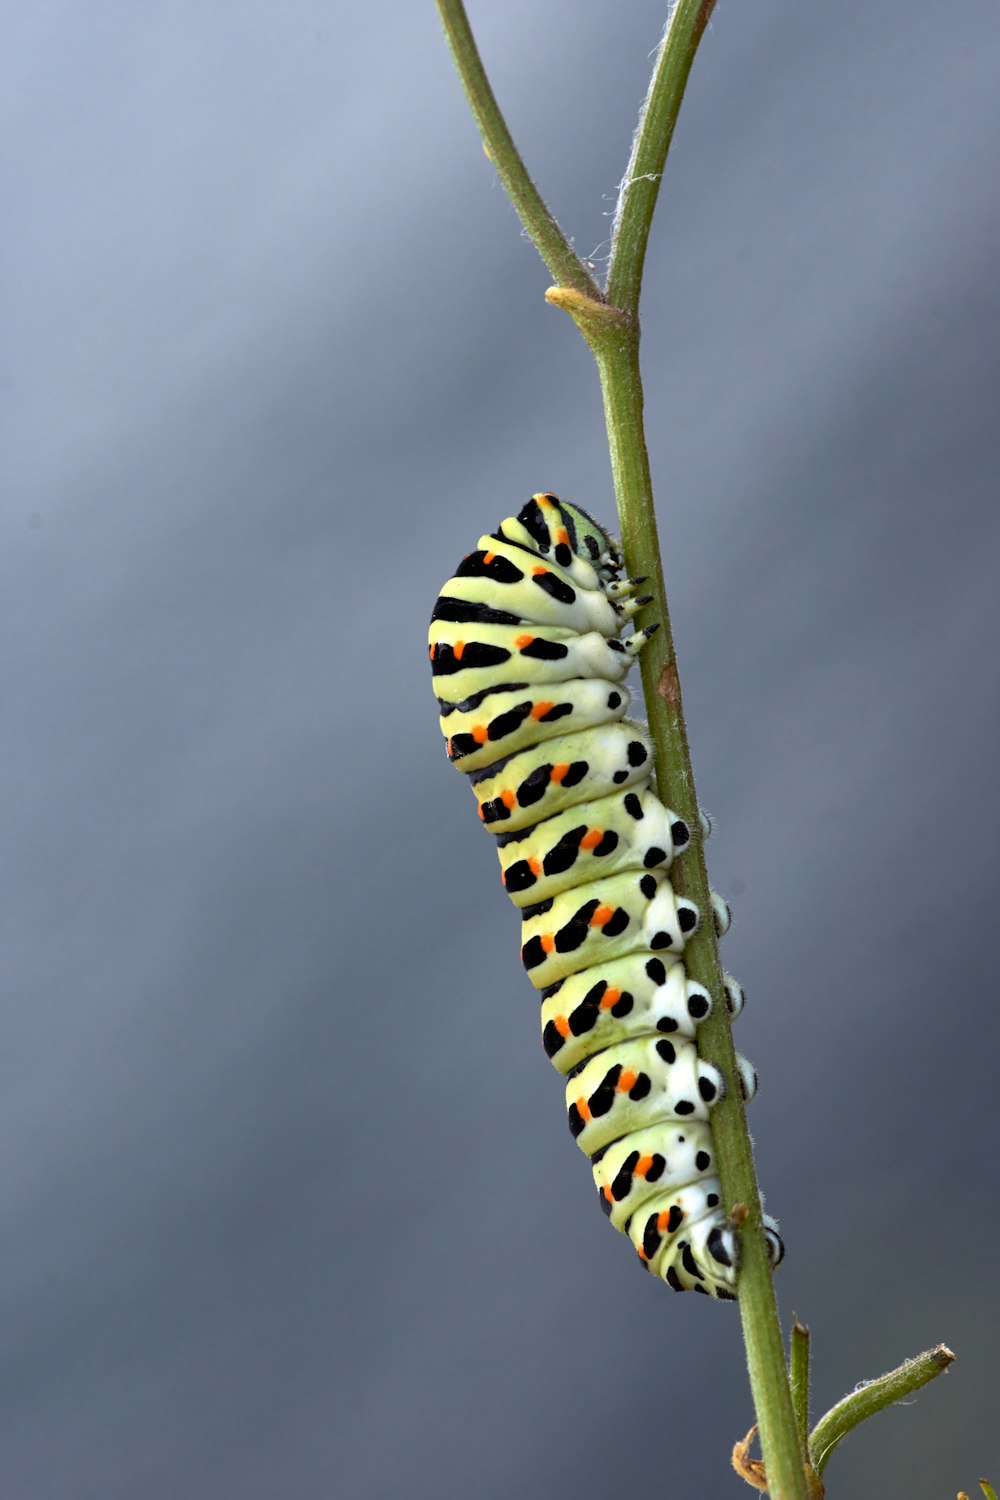 black and white caterpillar on green stem